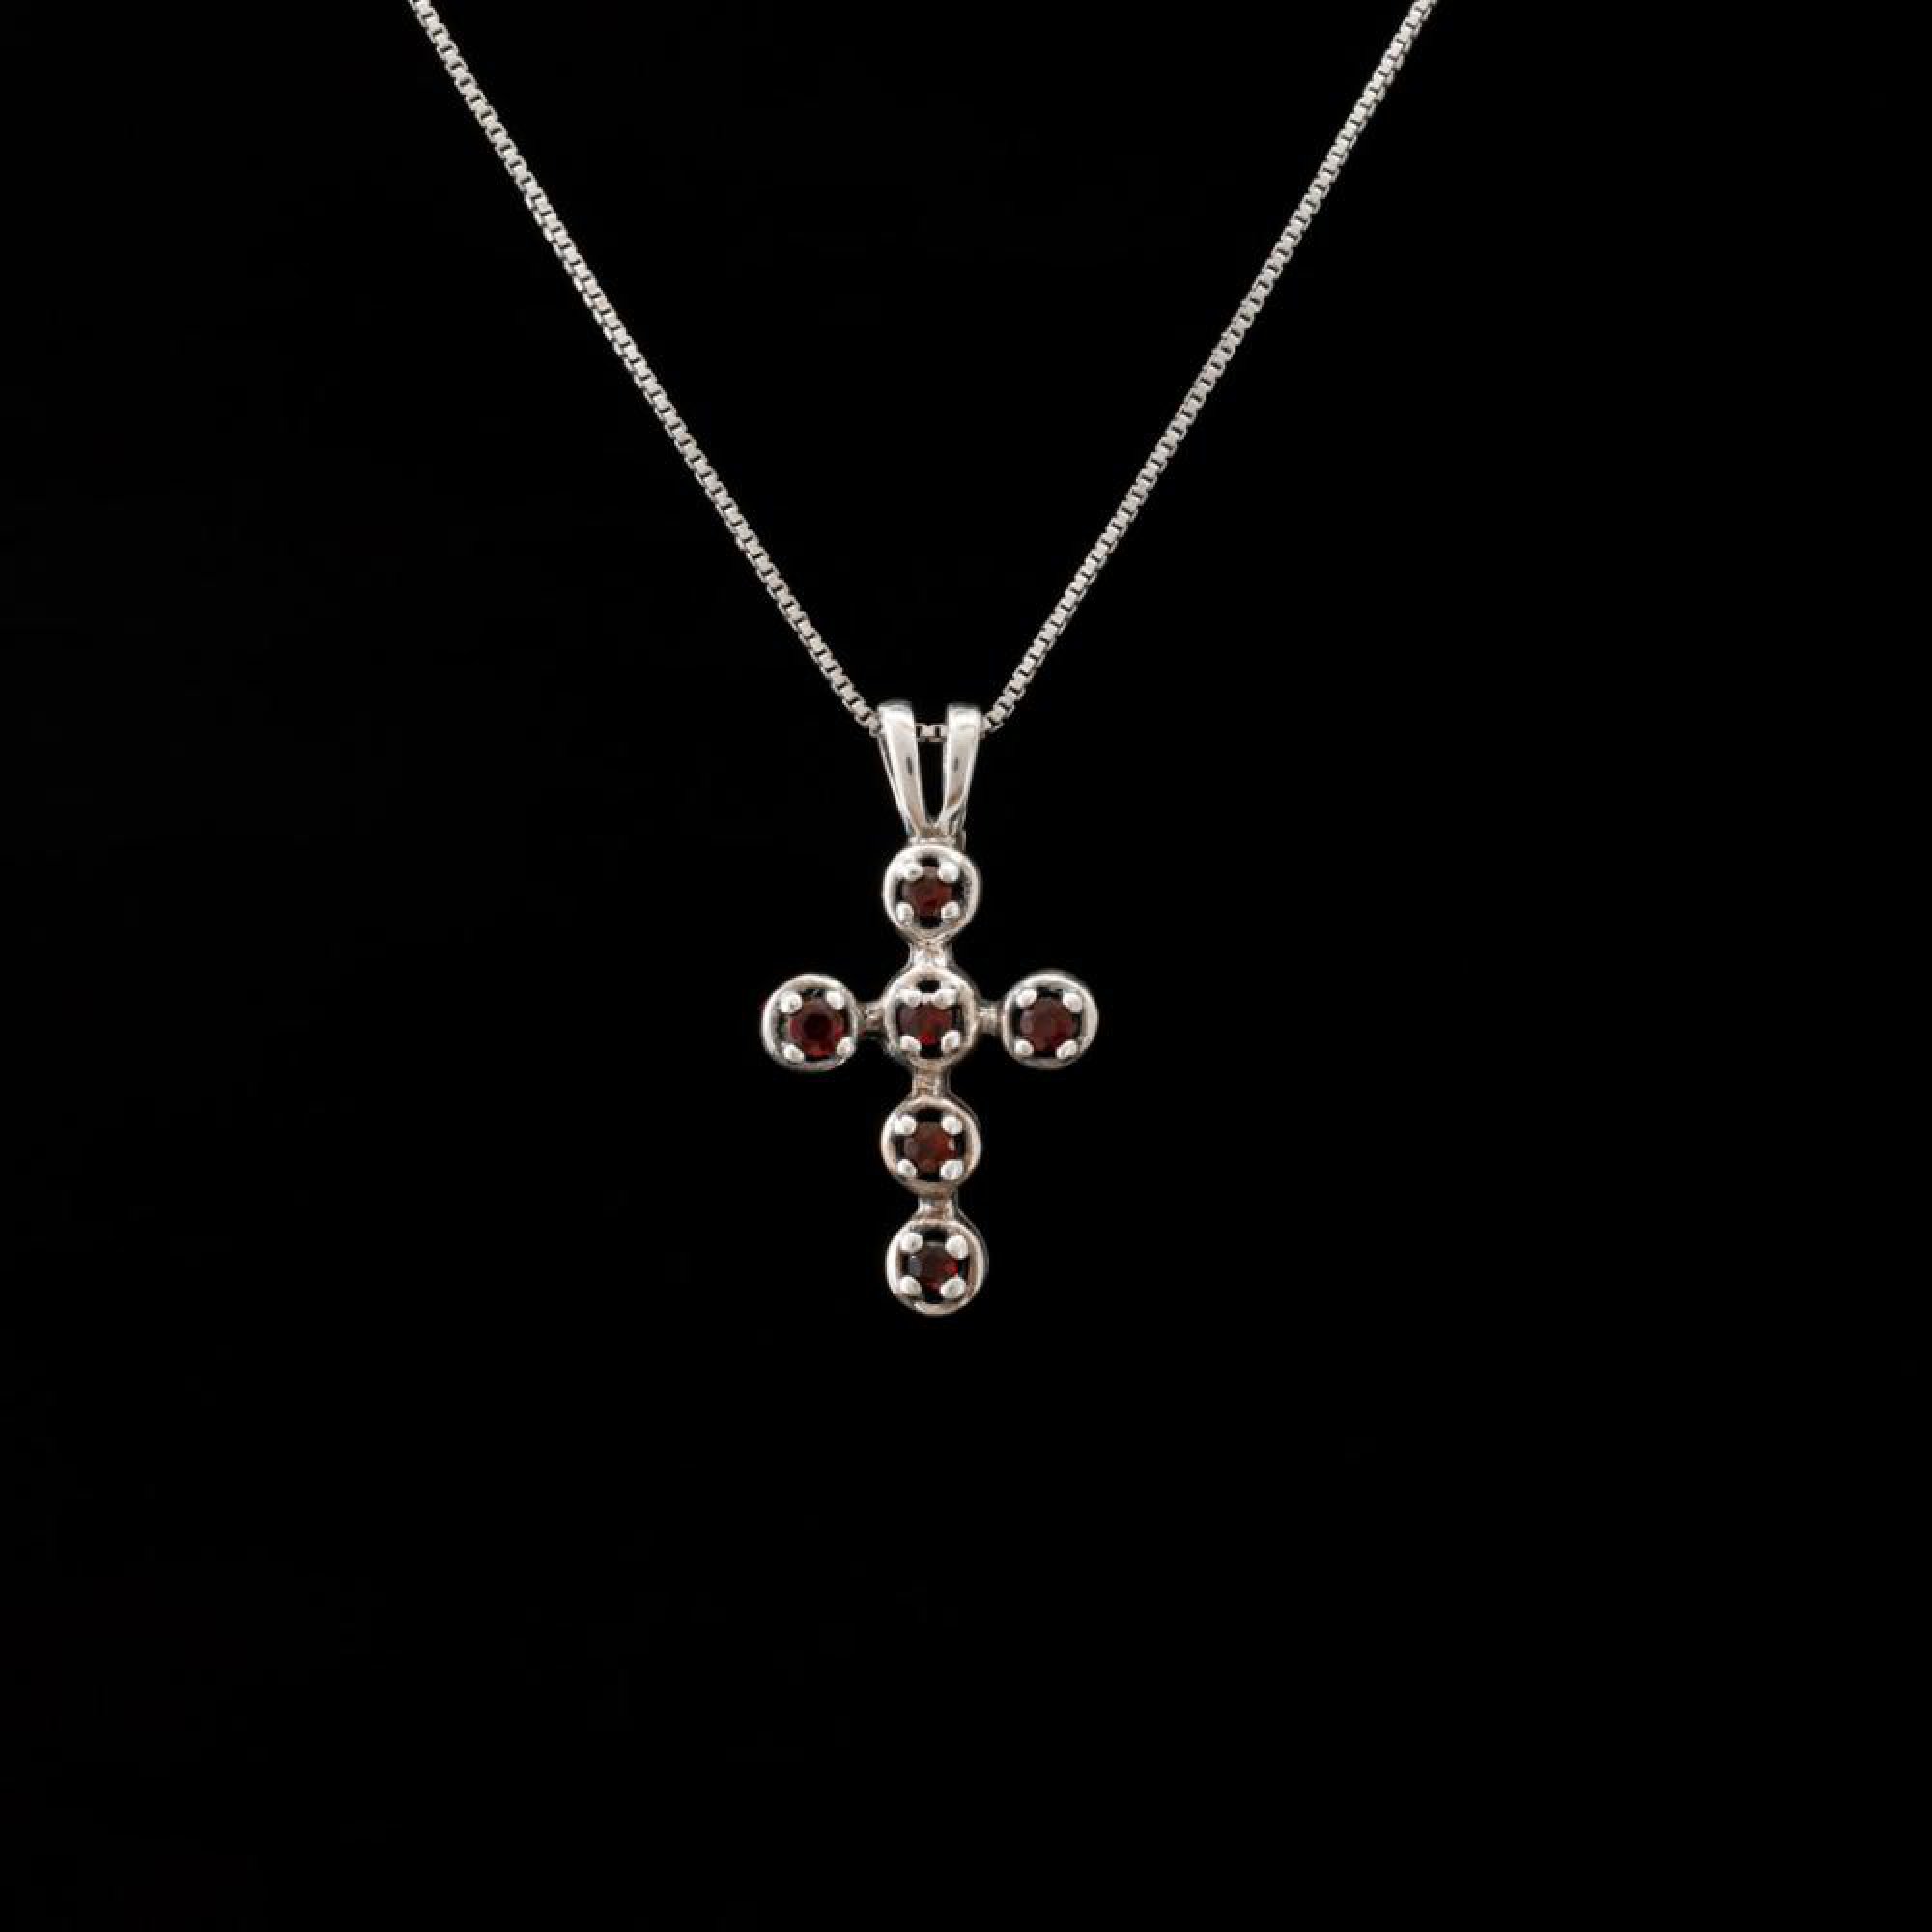 Silver cross with garnet stones